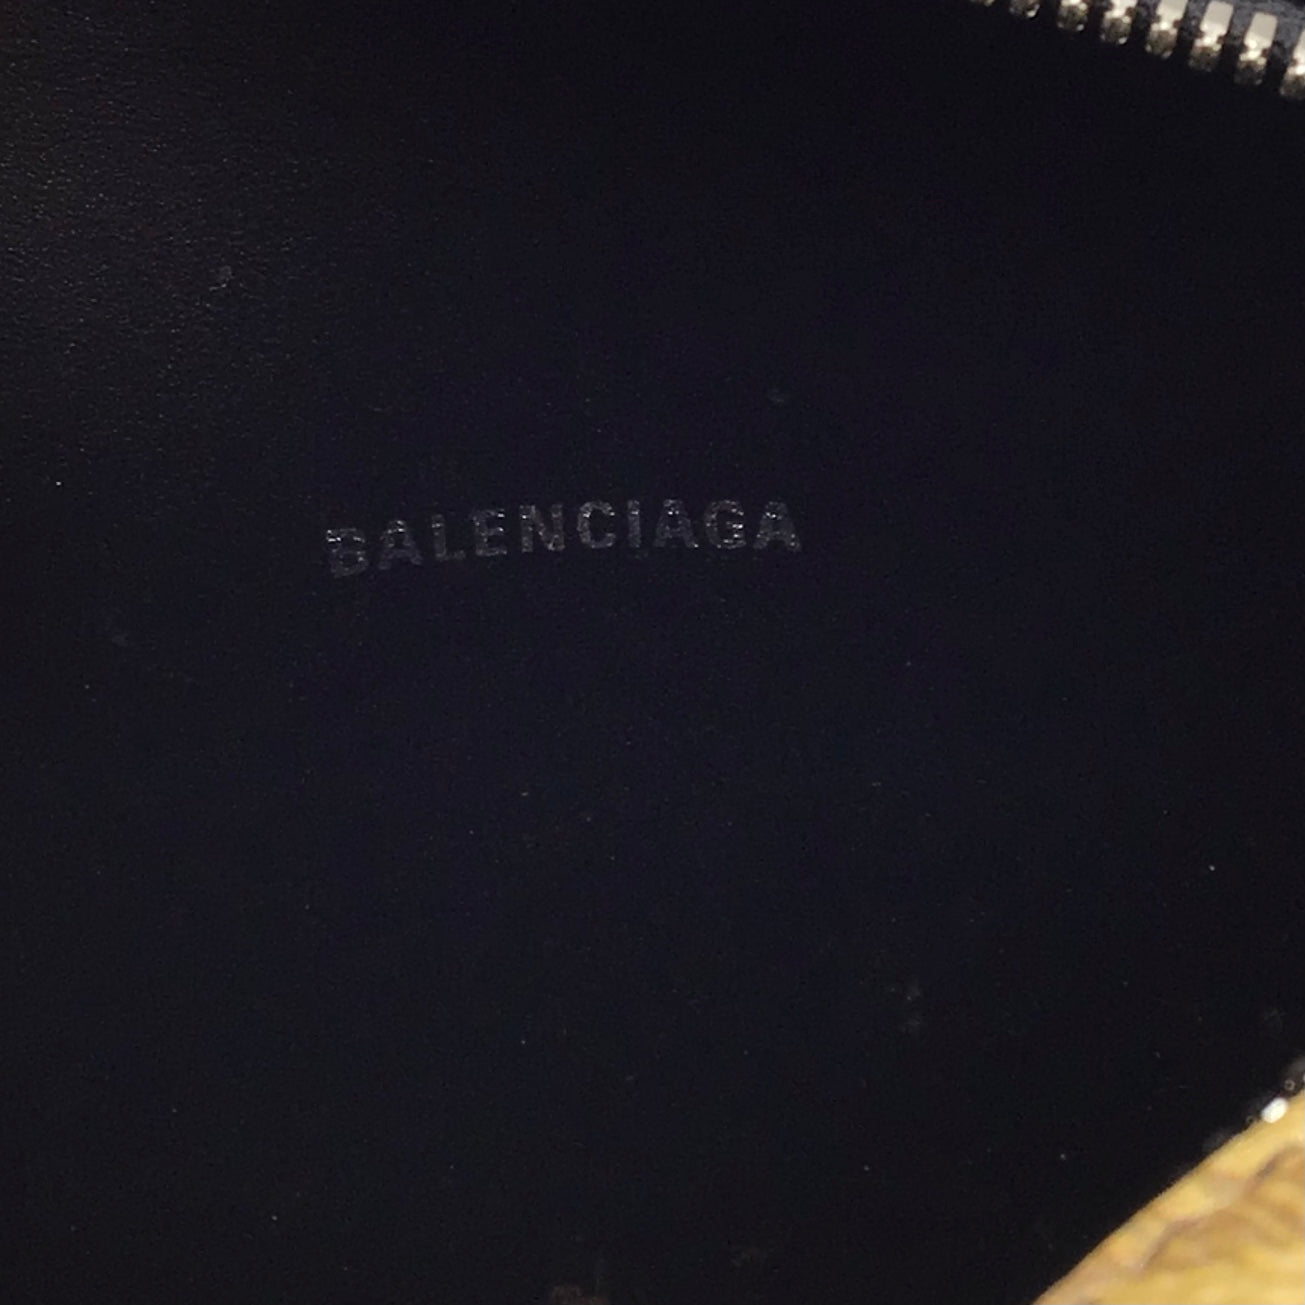 Balenciaga Tan / Black Leopard Printed Small Camera Handbag